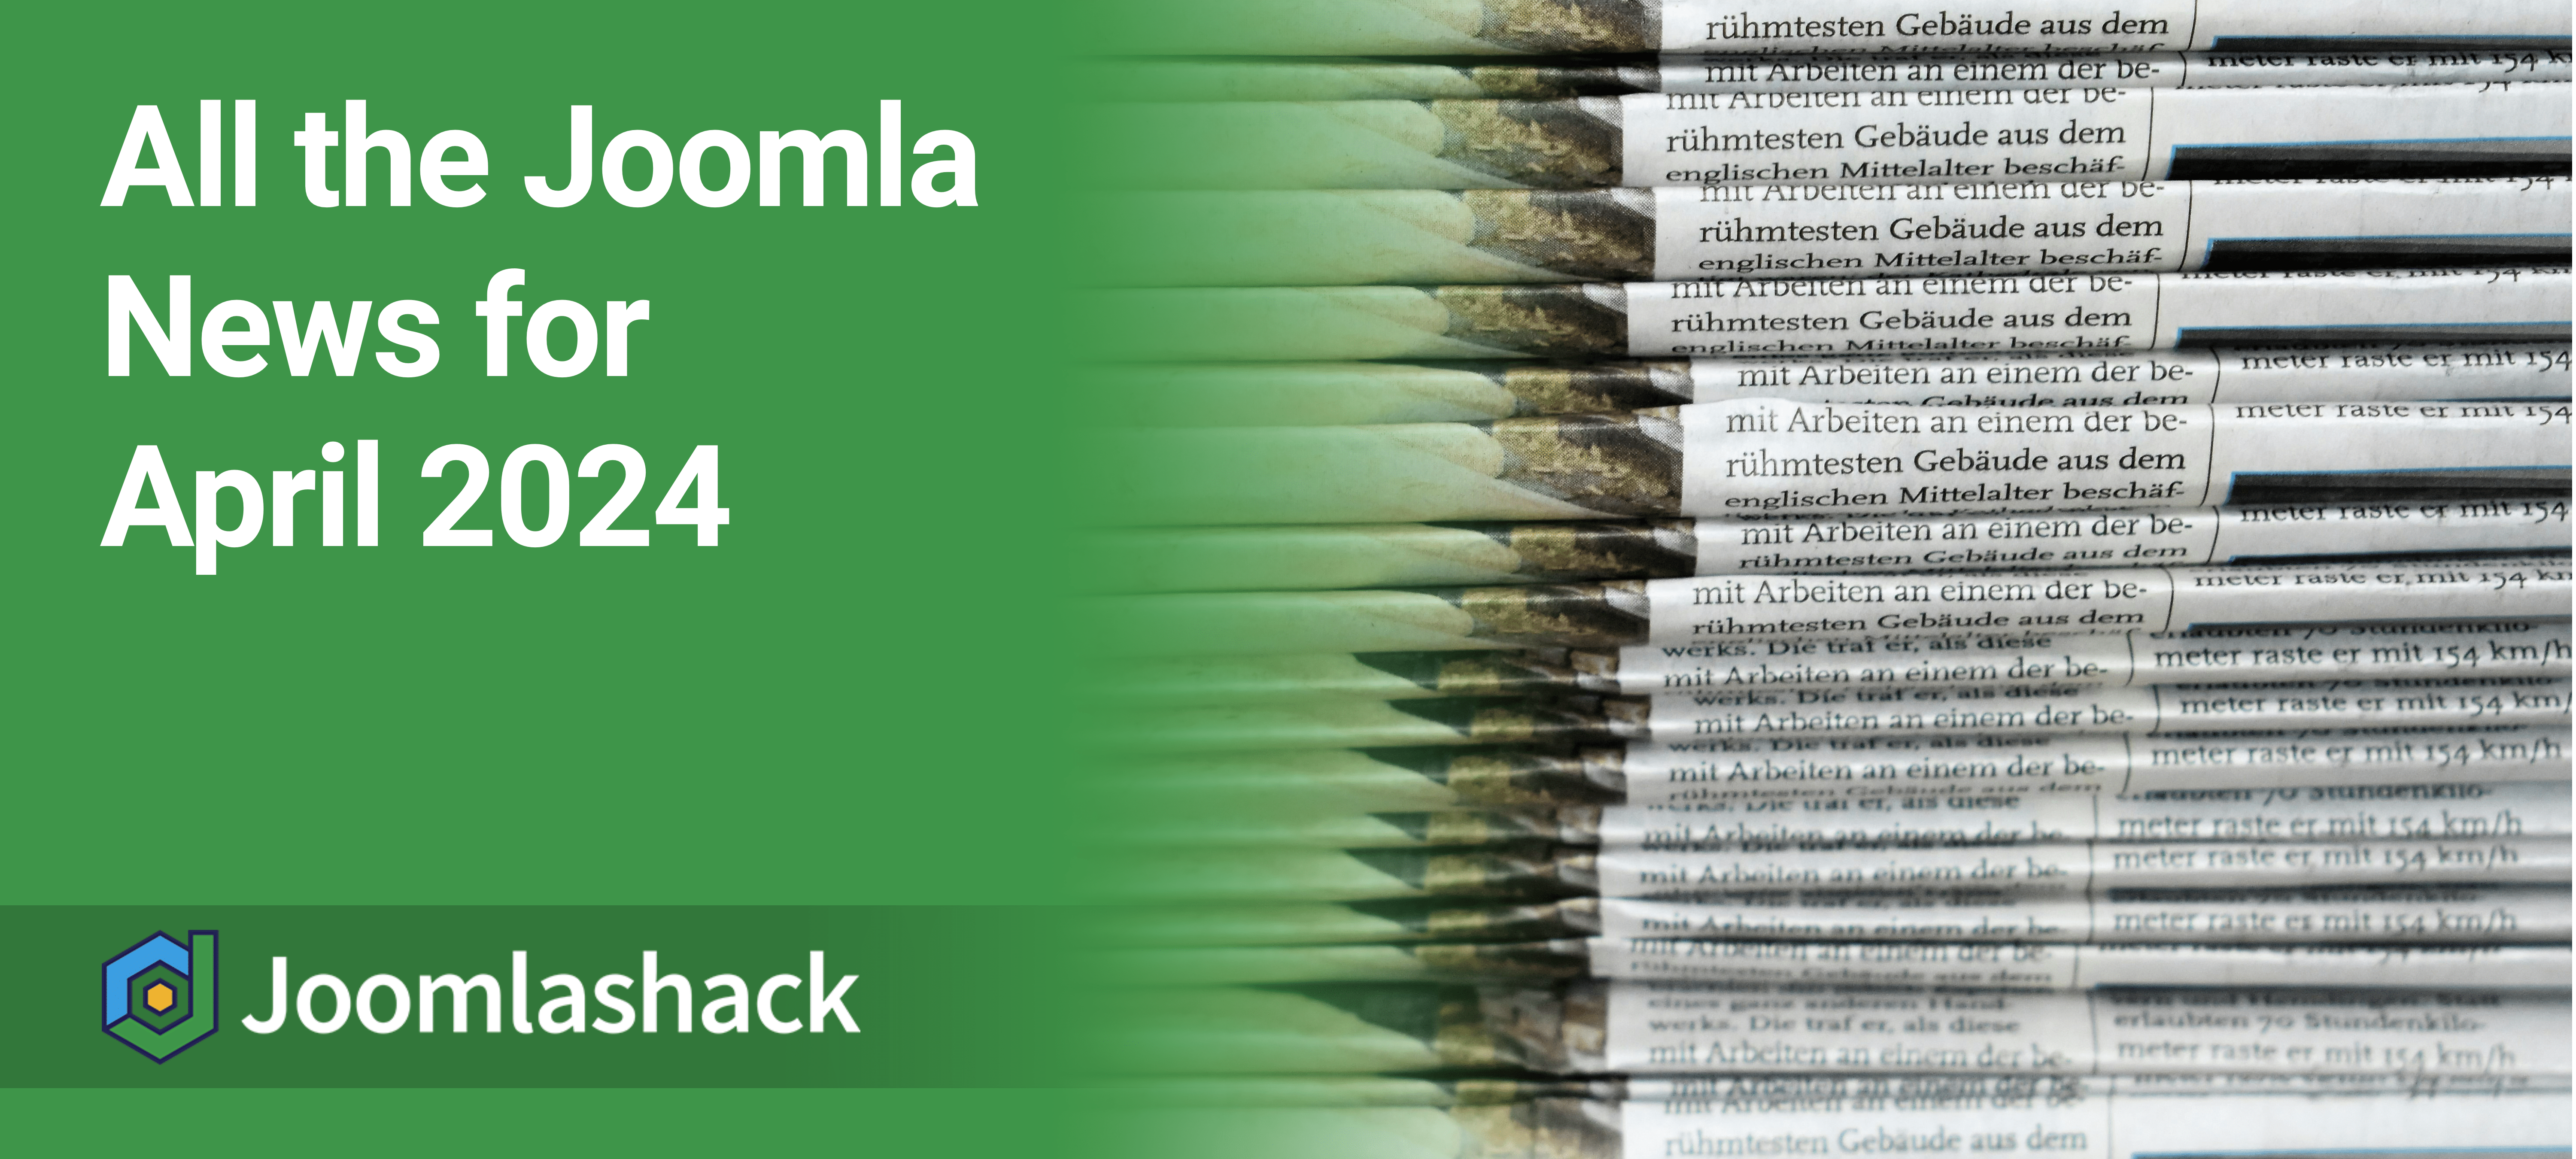 All the Joomla News for April 2024